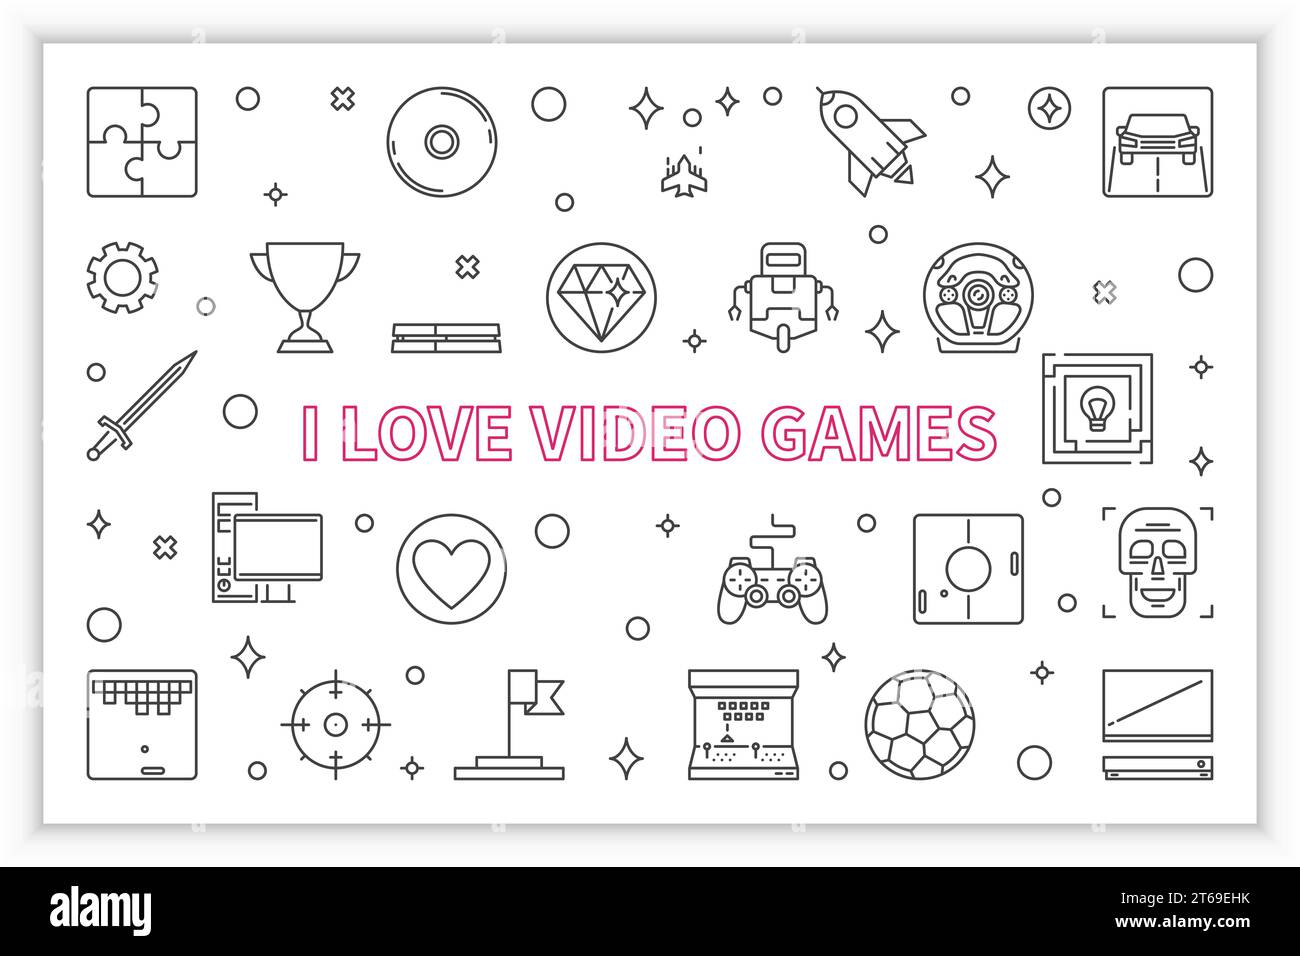 I Love Video Games vector concept outline horizontal illustration on white background Stock Vector